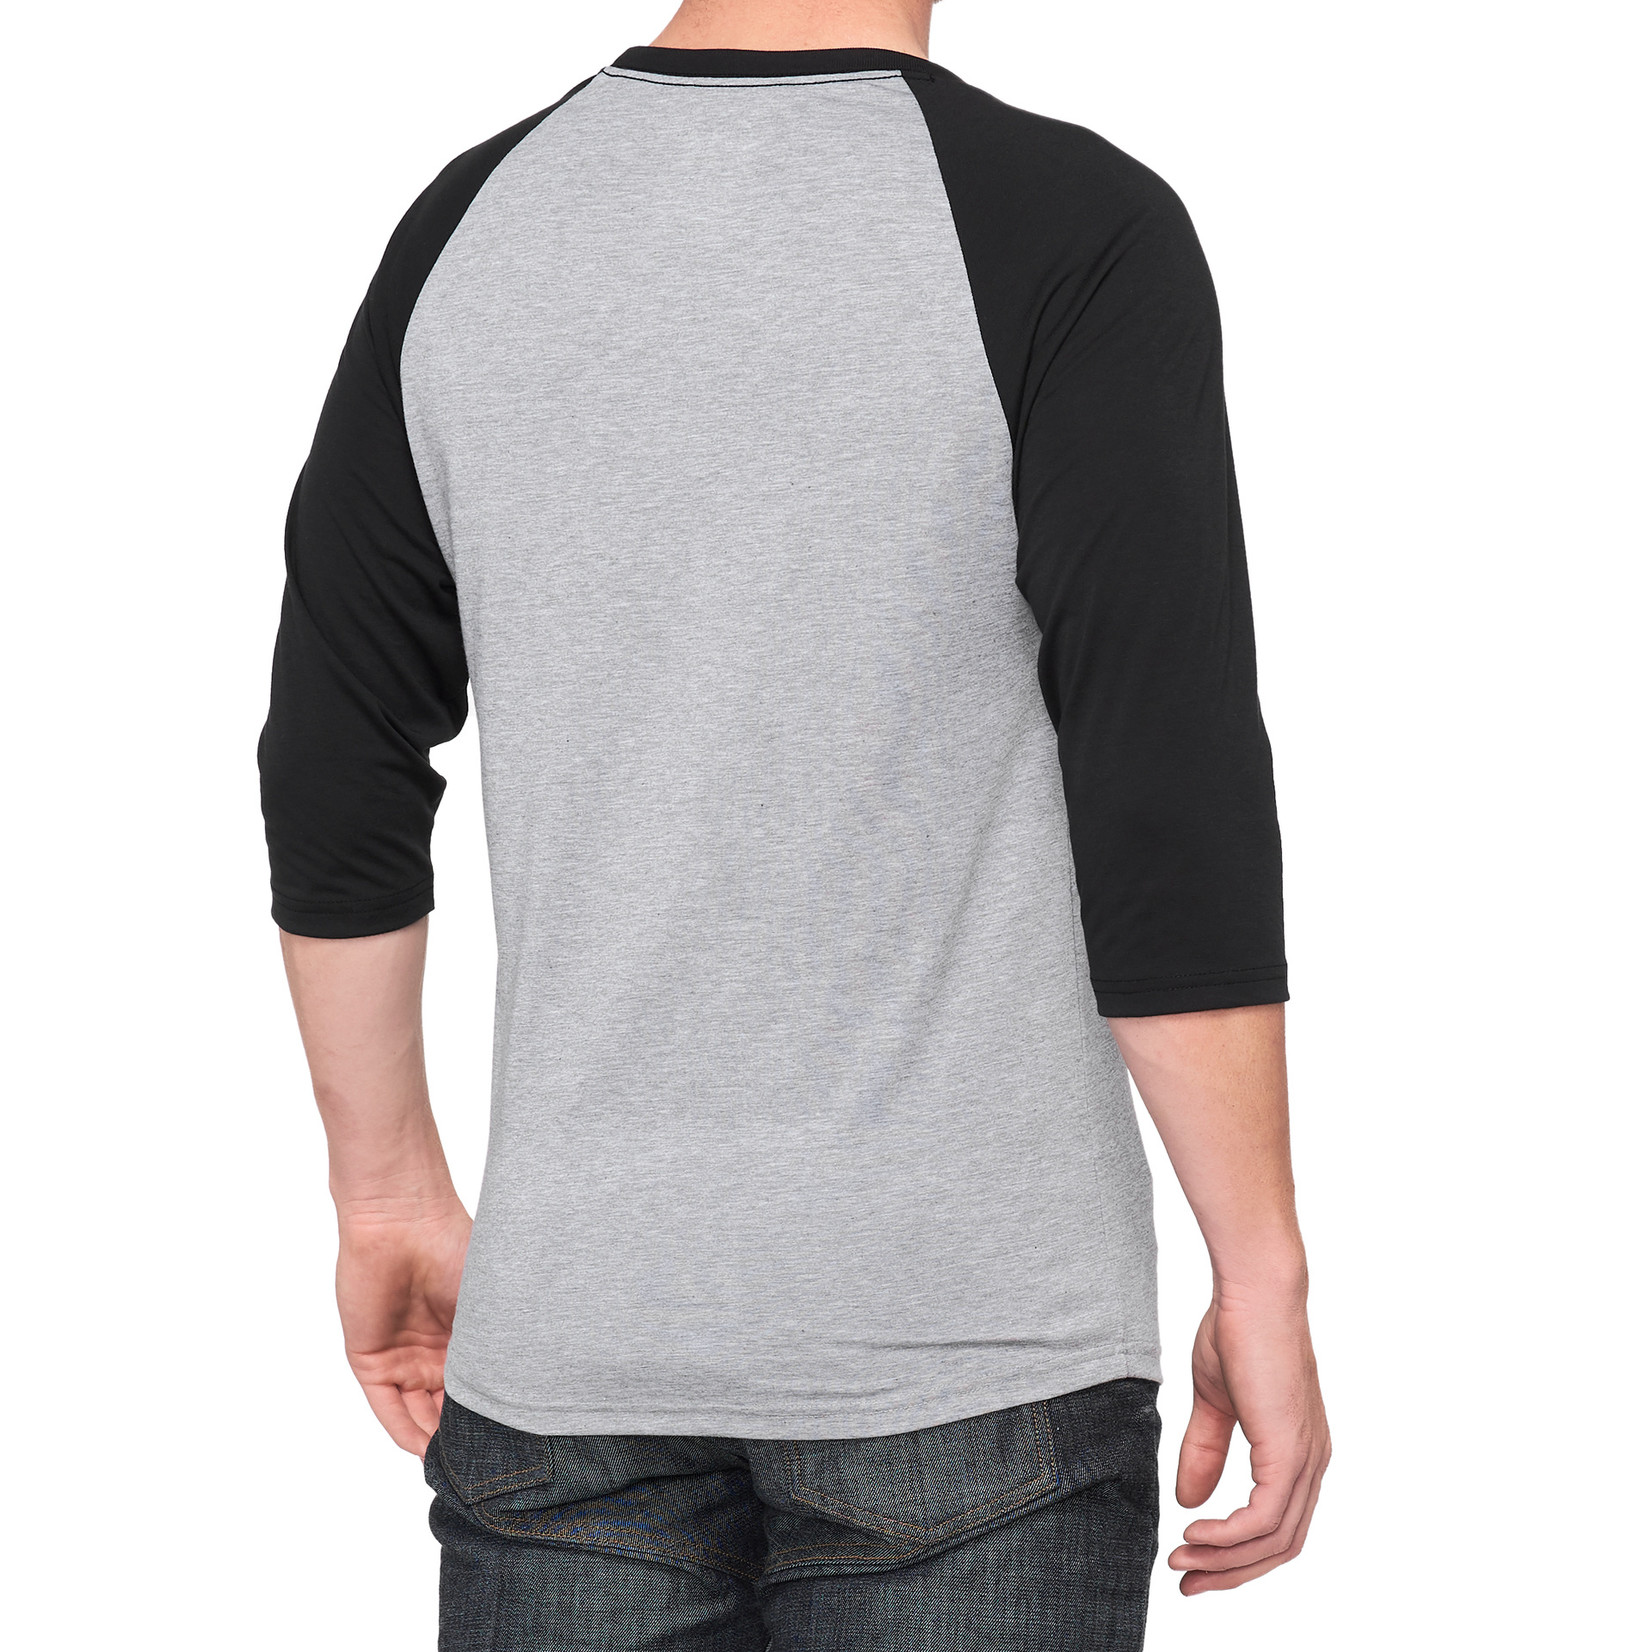 FE sports 100% Essential 3/4 Tech Tee Shirt - Grey/Black 100% Organic Cotton